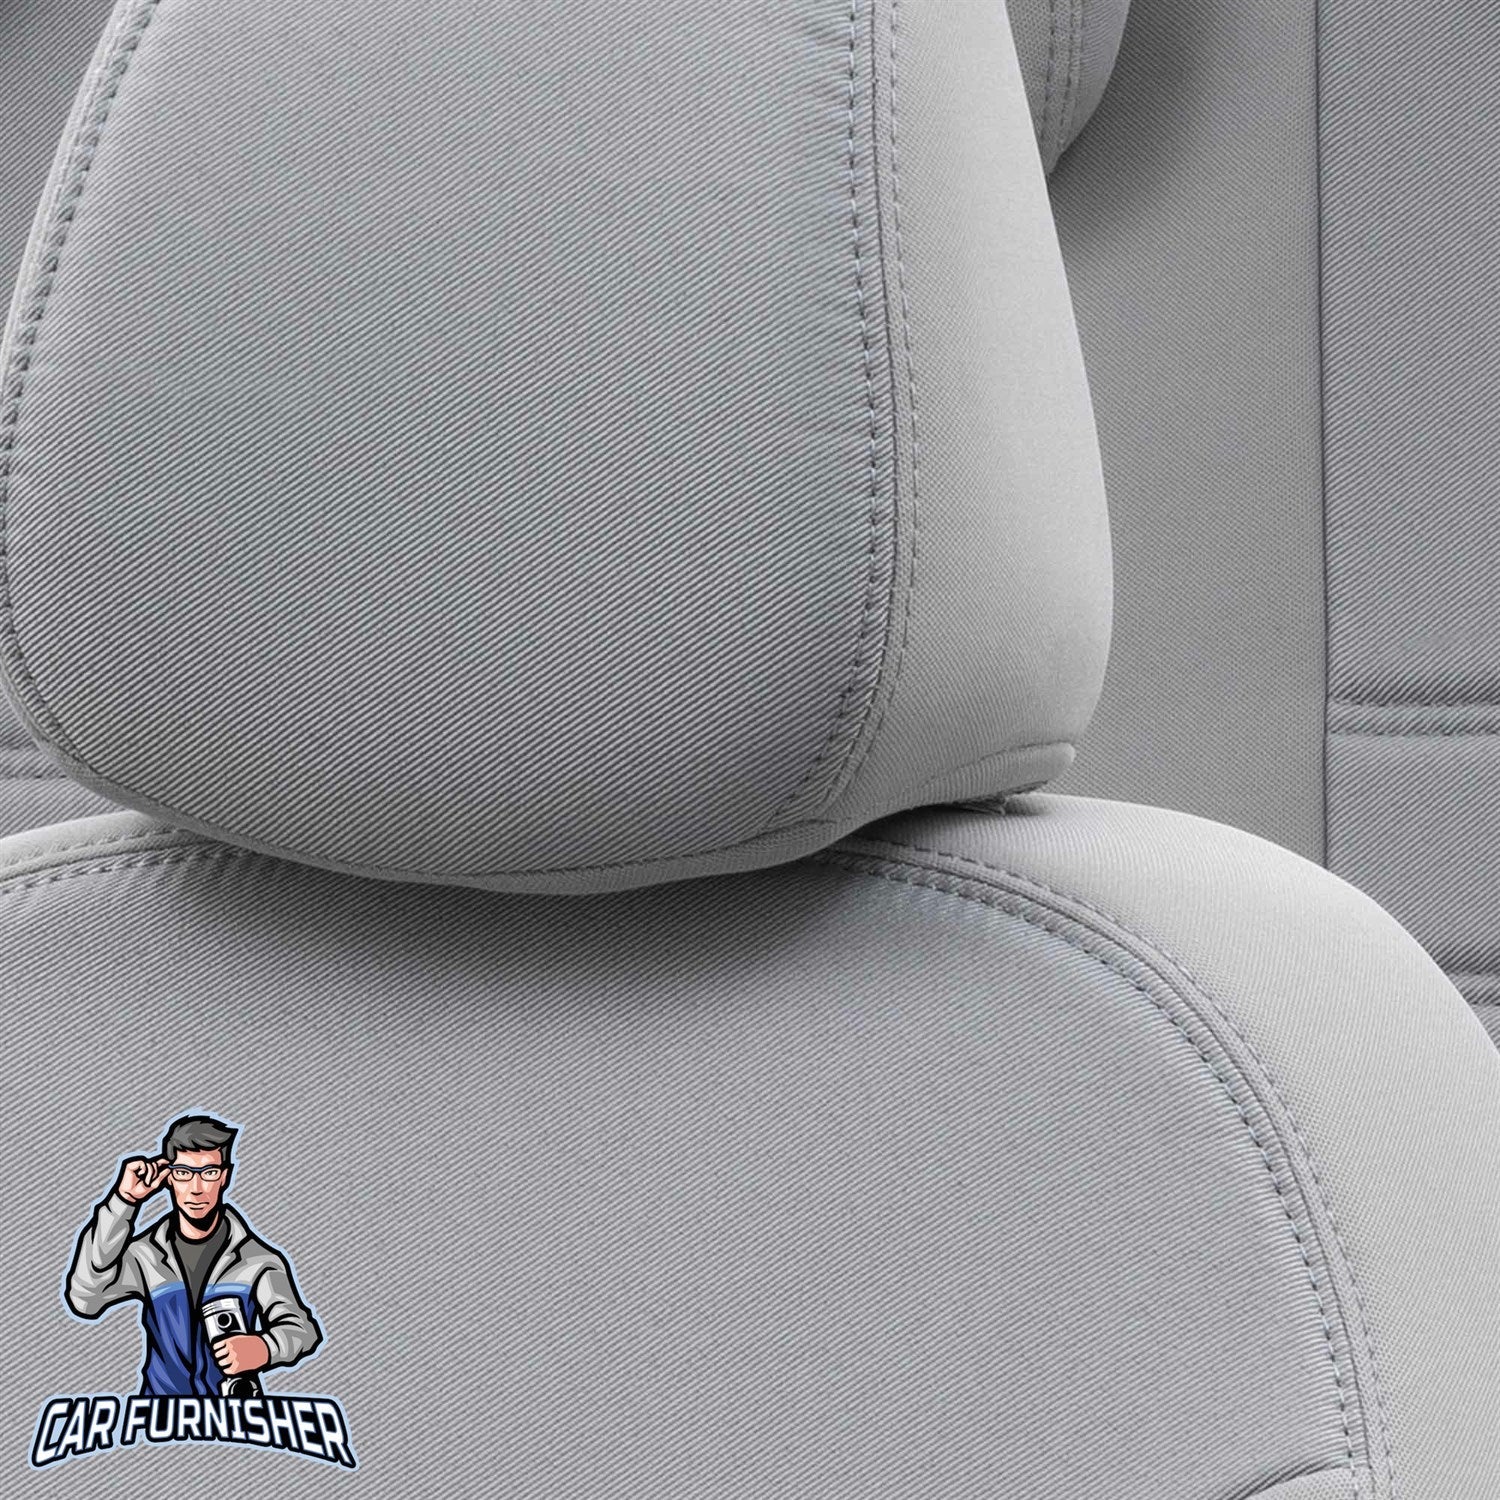 Nissan Almera Seat Covers Original Jacquard Design Light Gray Jacquard Fabric